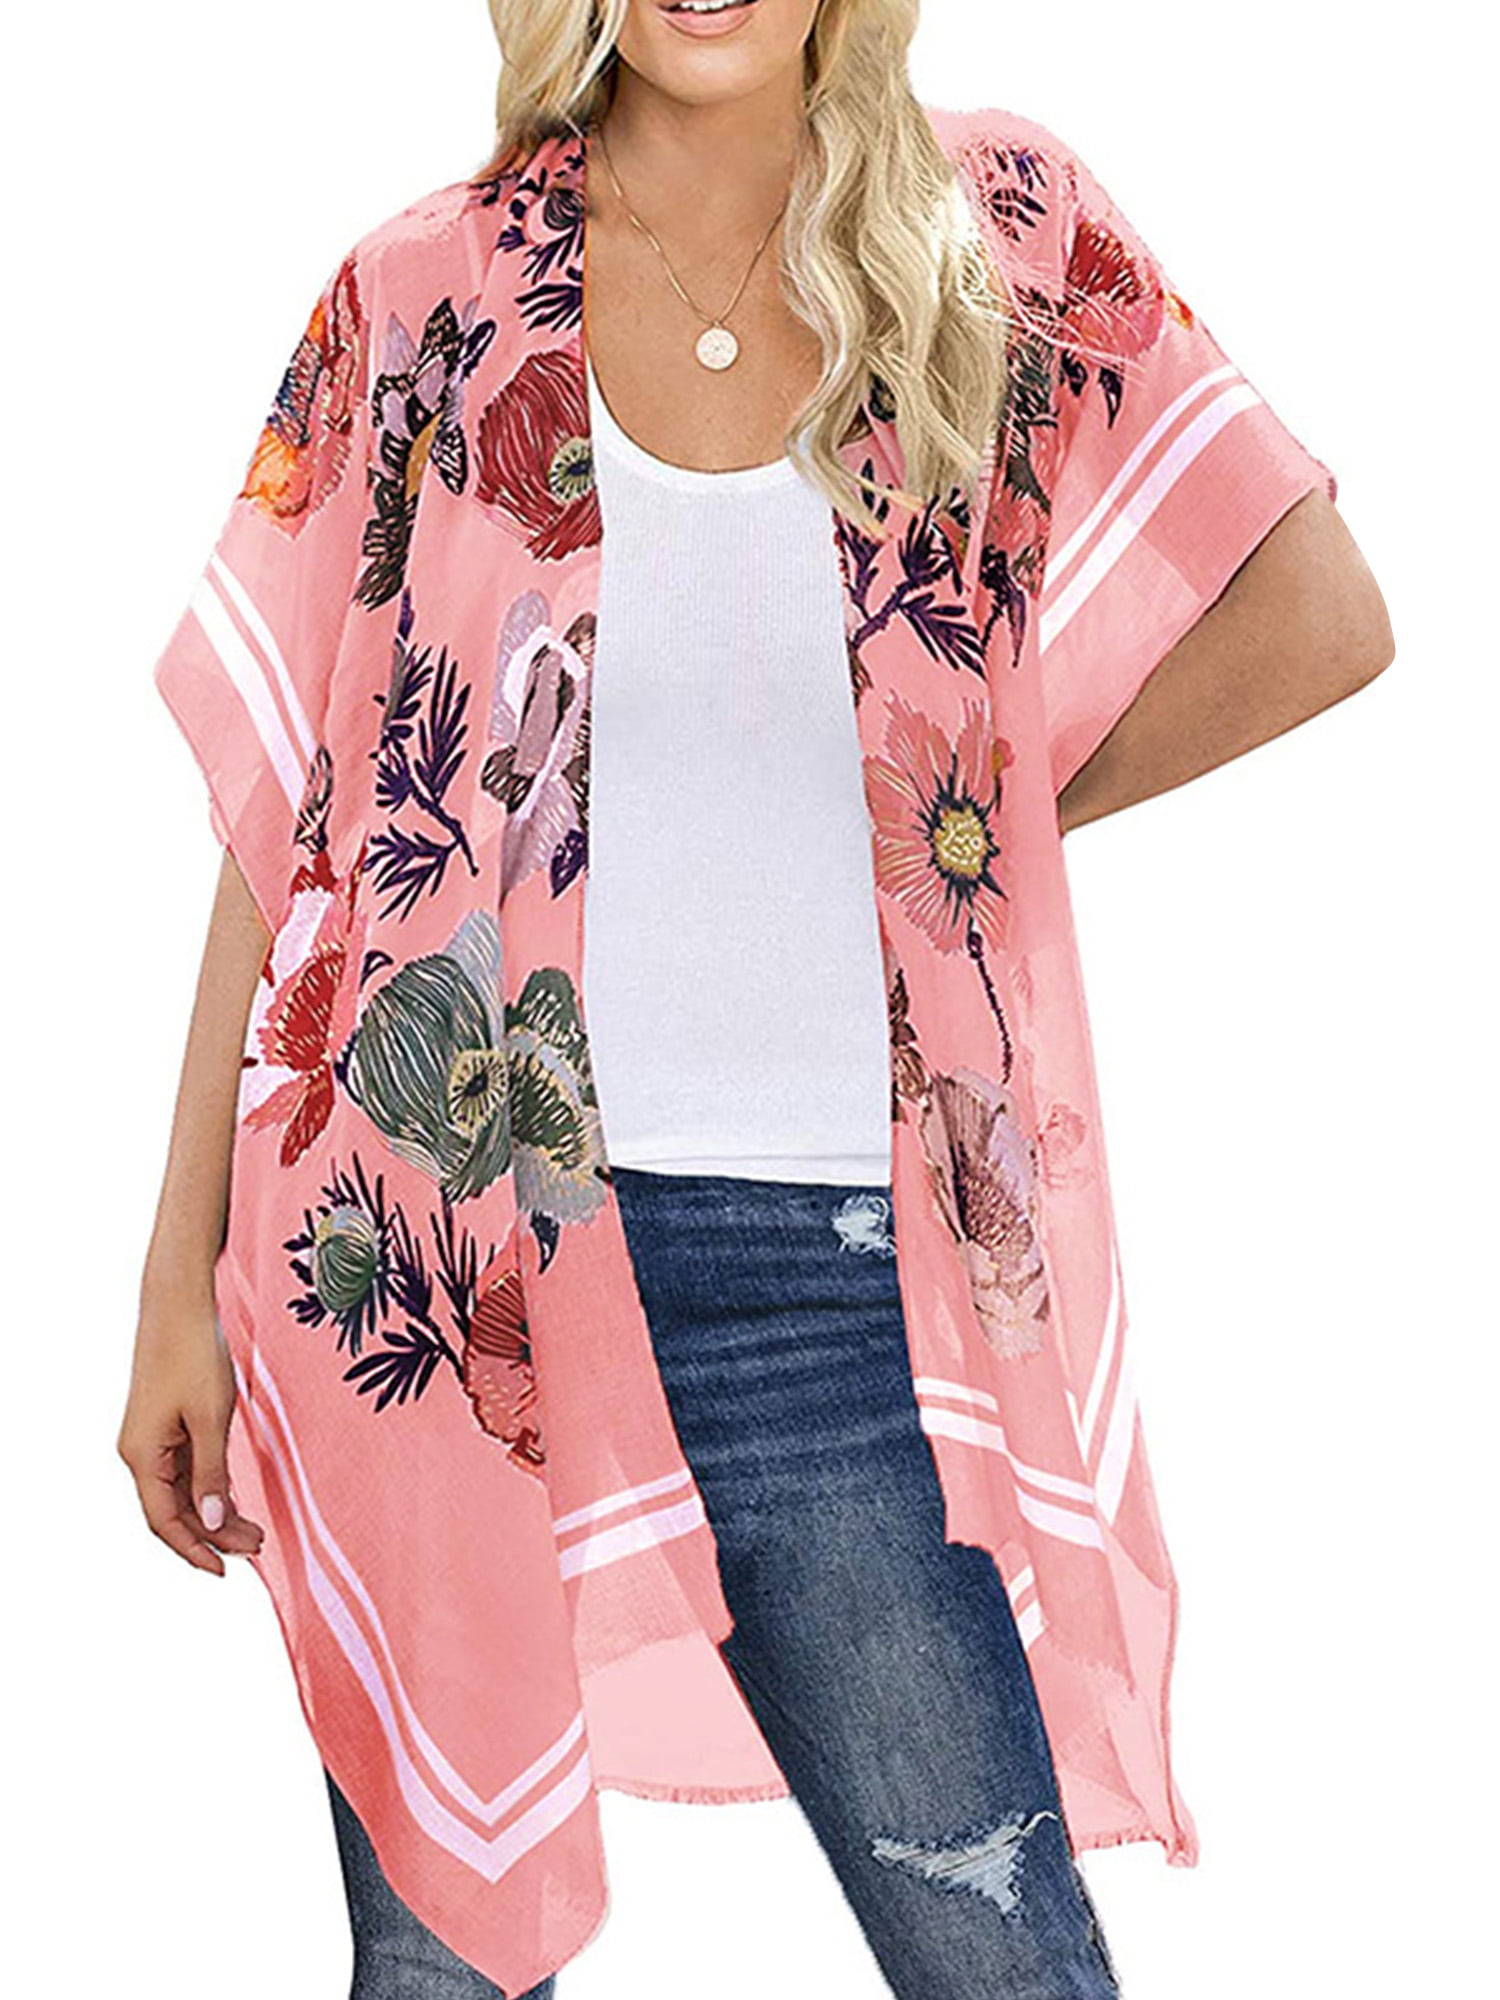 Casual Chiffon Kimonos Tops Boho Loose Blouse Open Front Swinsuit Beach Cover Ups Women Floral Kimono Cardigan